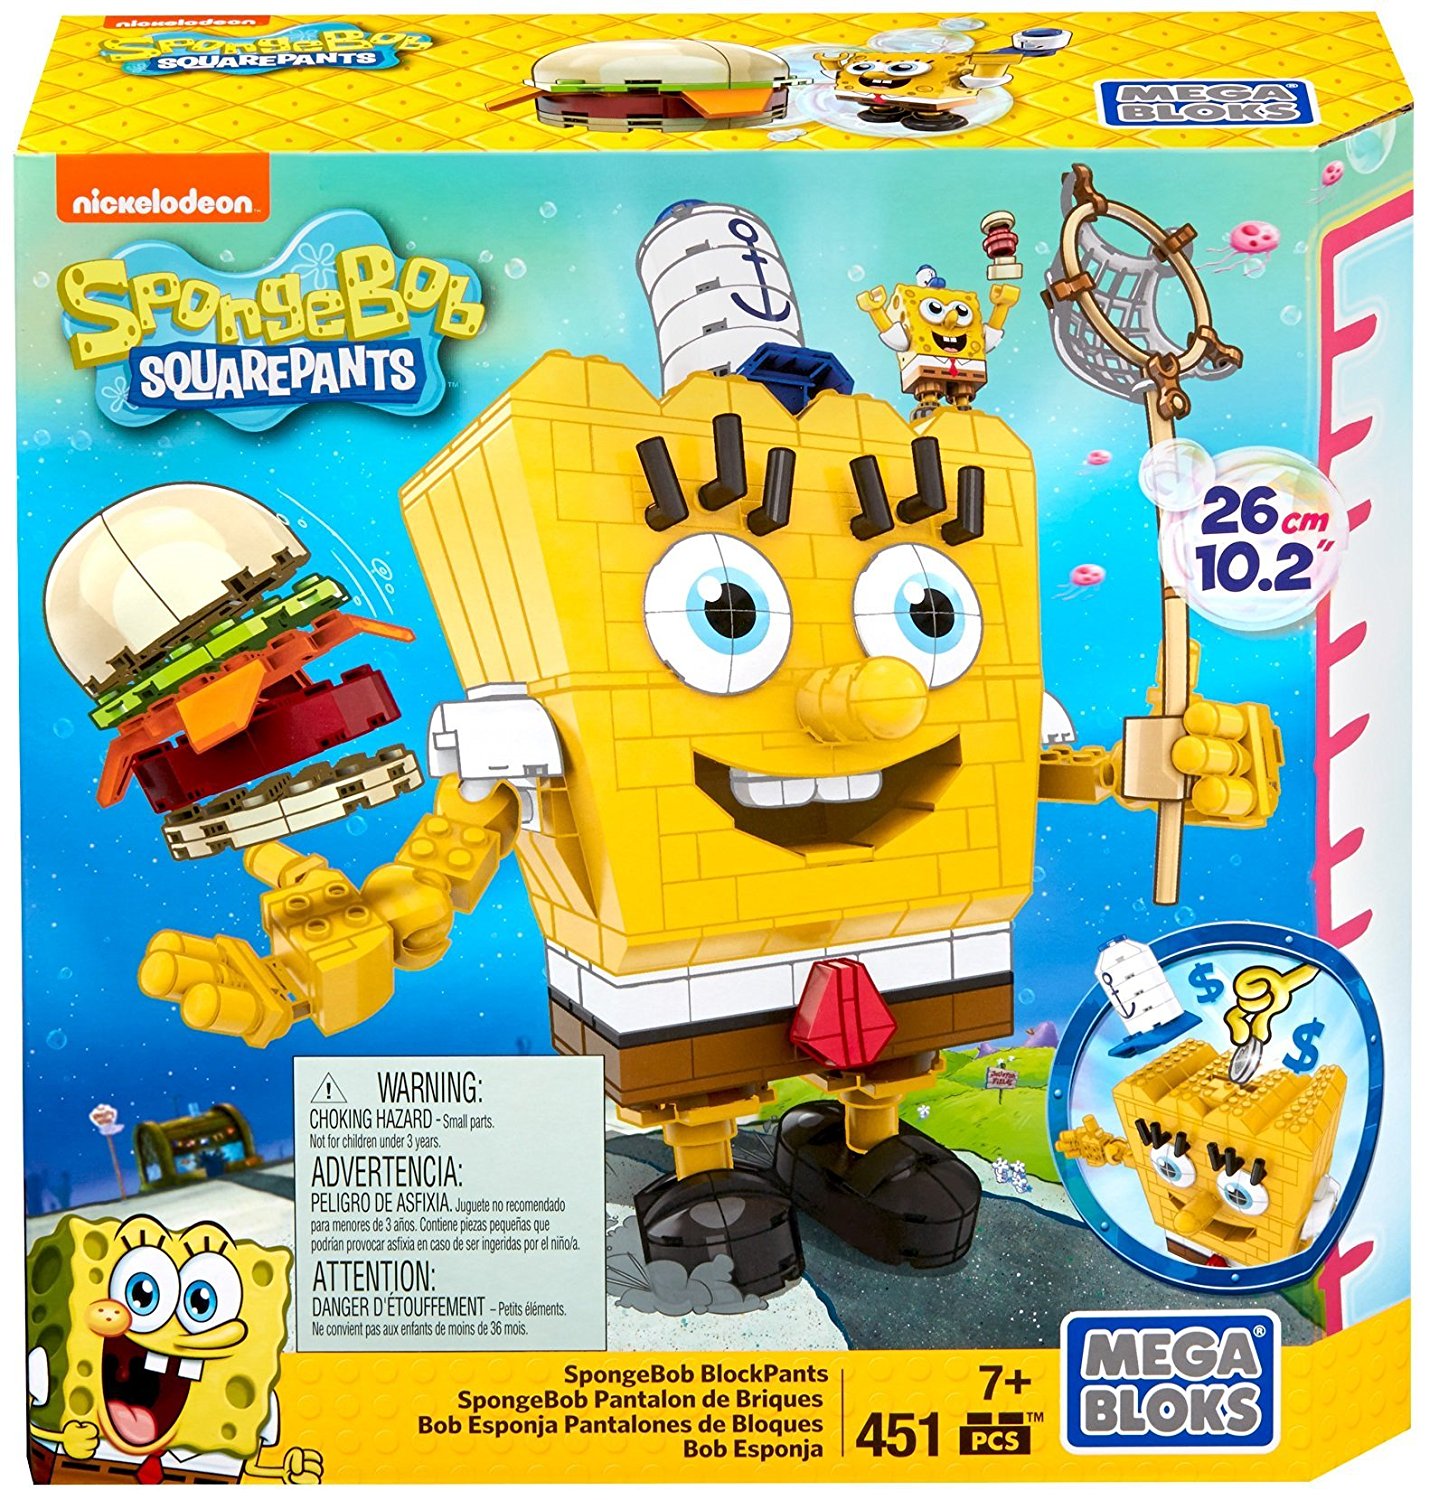 Mega Bloks SpongeBob SquarePants Block Construction Set – Just $10.55!